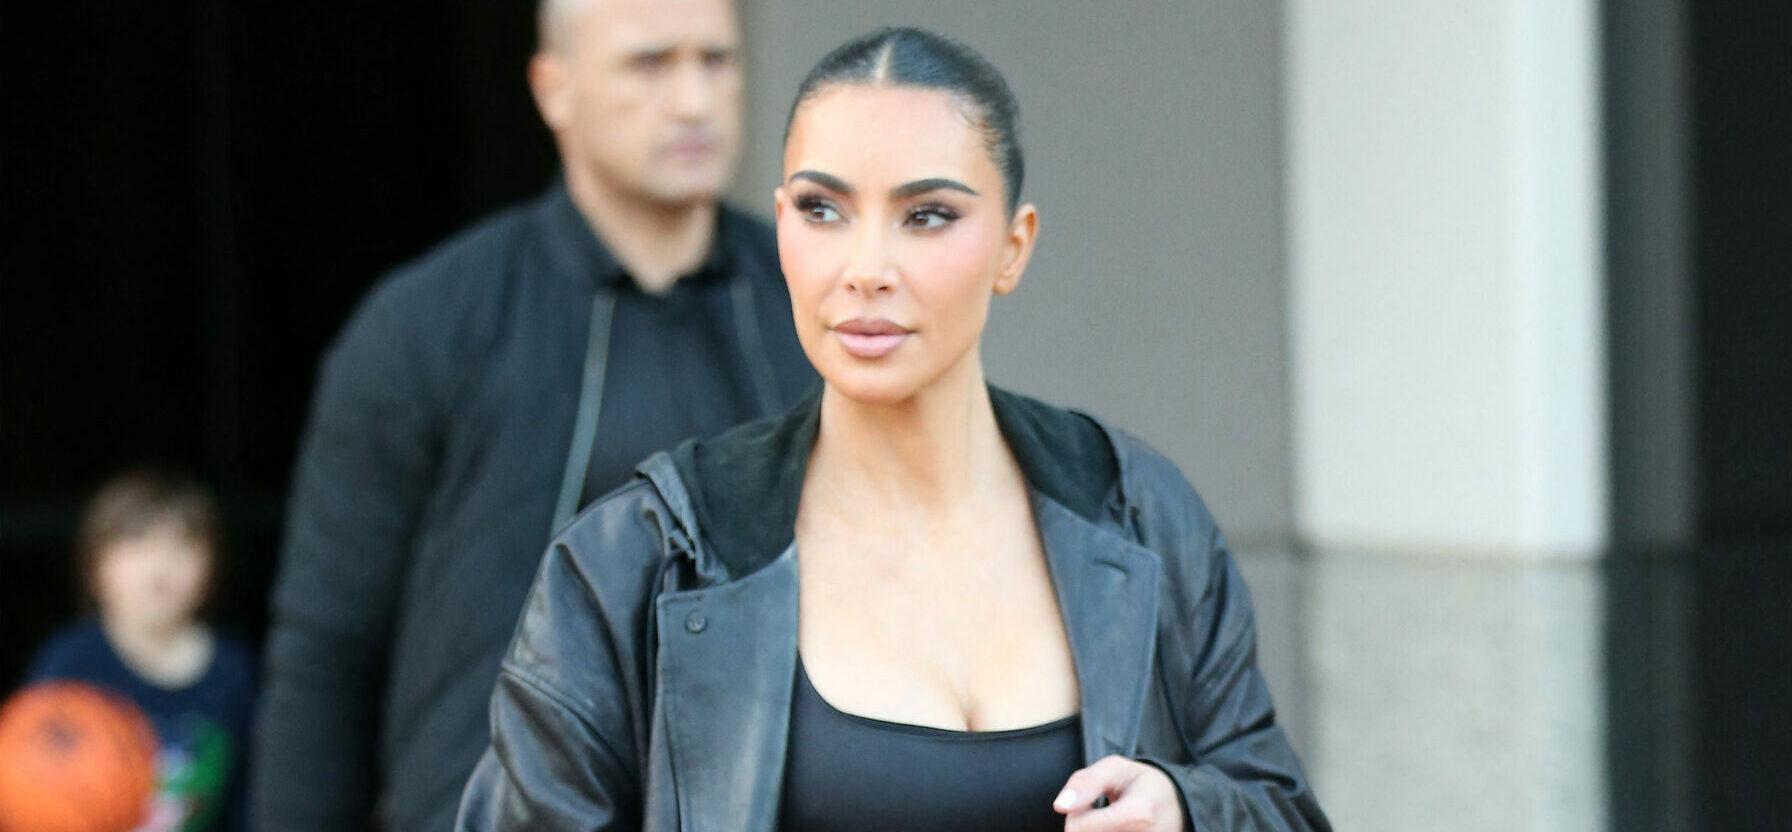 Kim Kardashian wears a long black leather jacket as she is seen leaving a basketball game in Thousand Oaks Ca